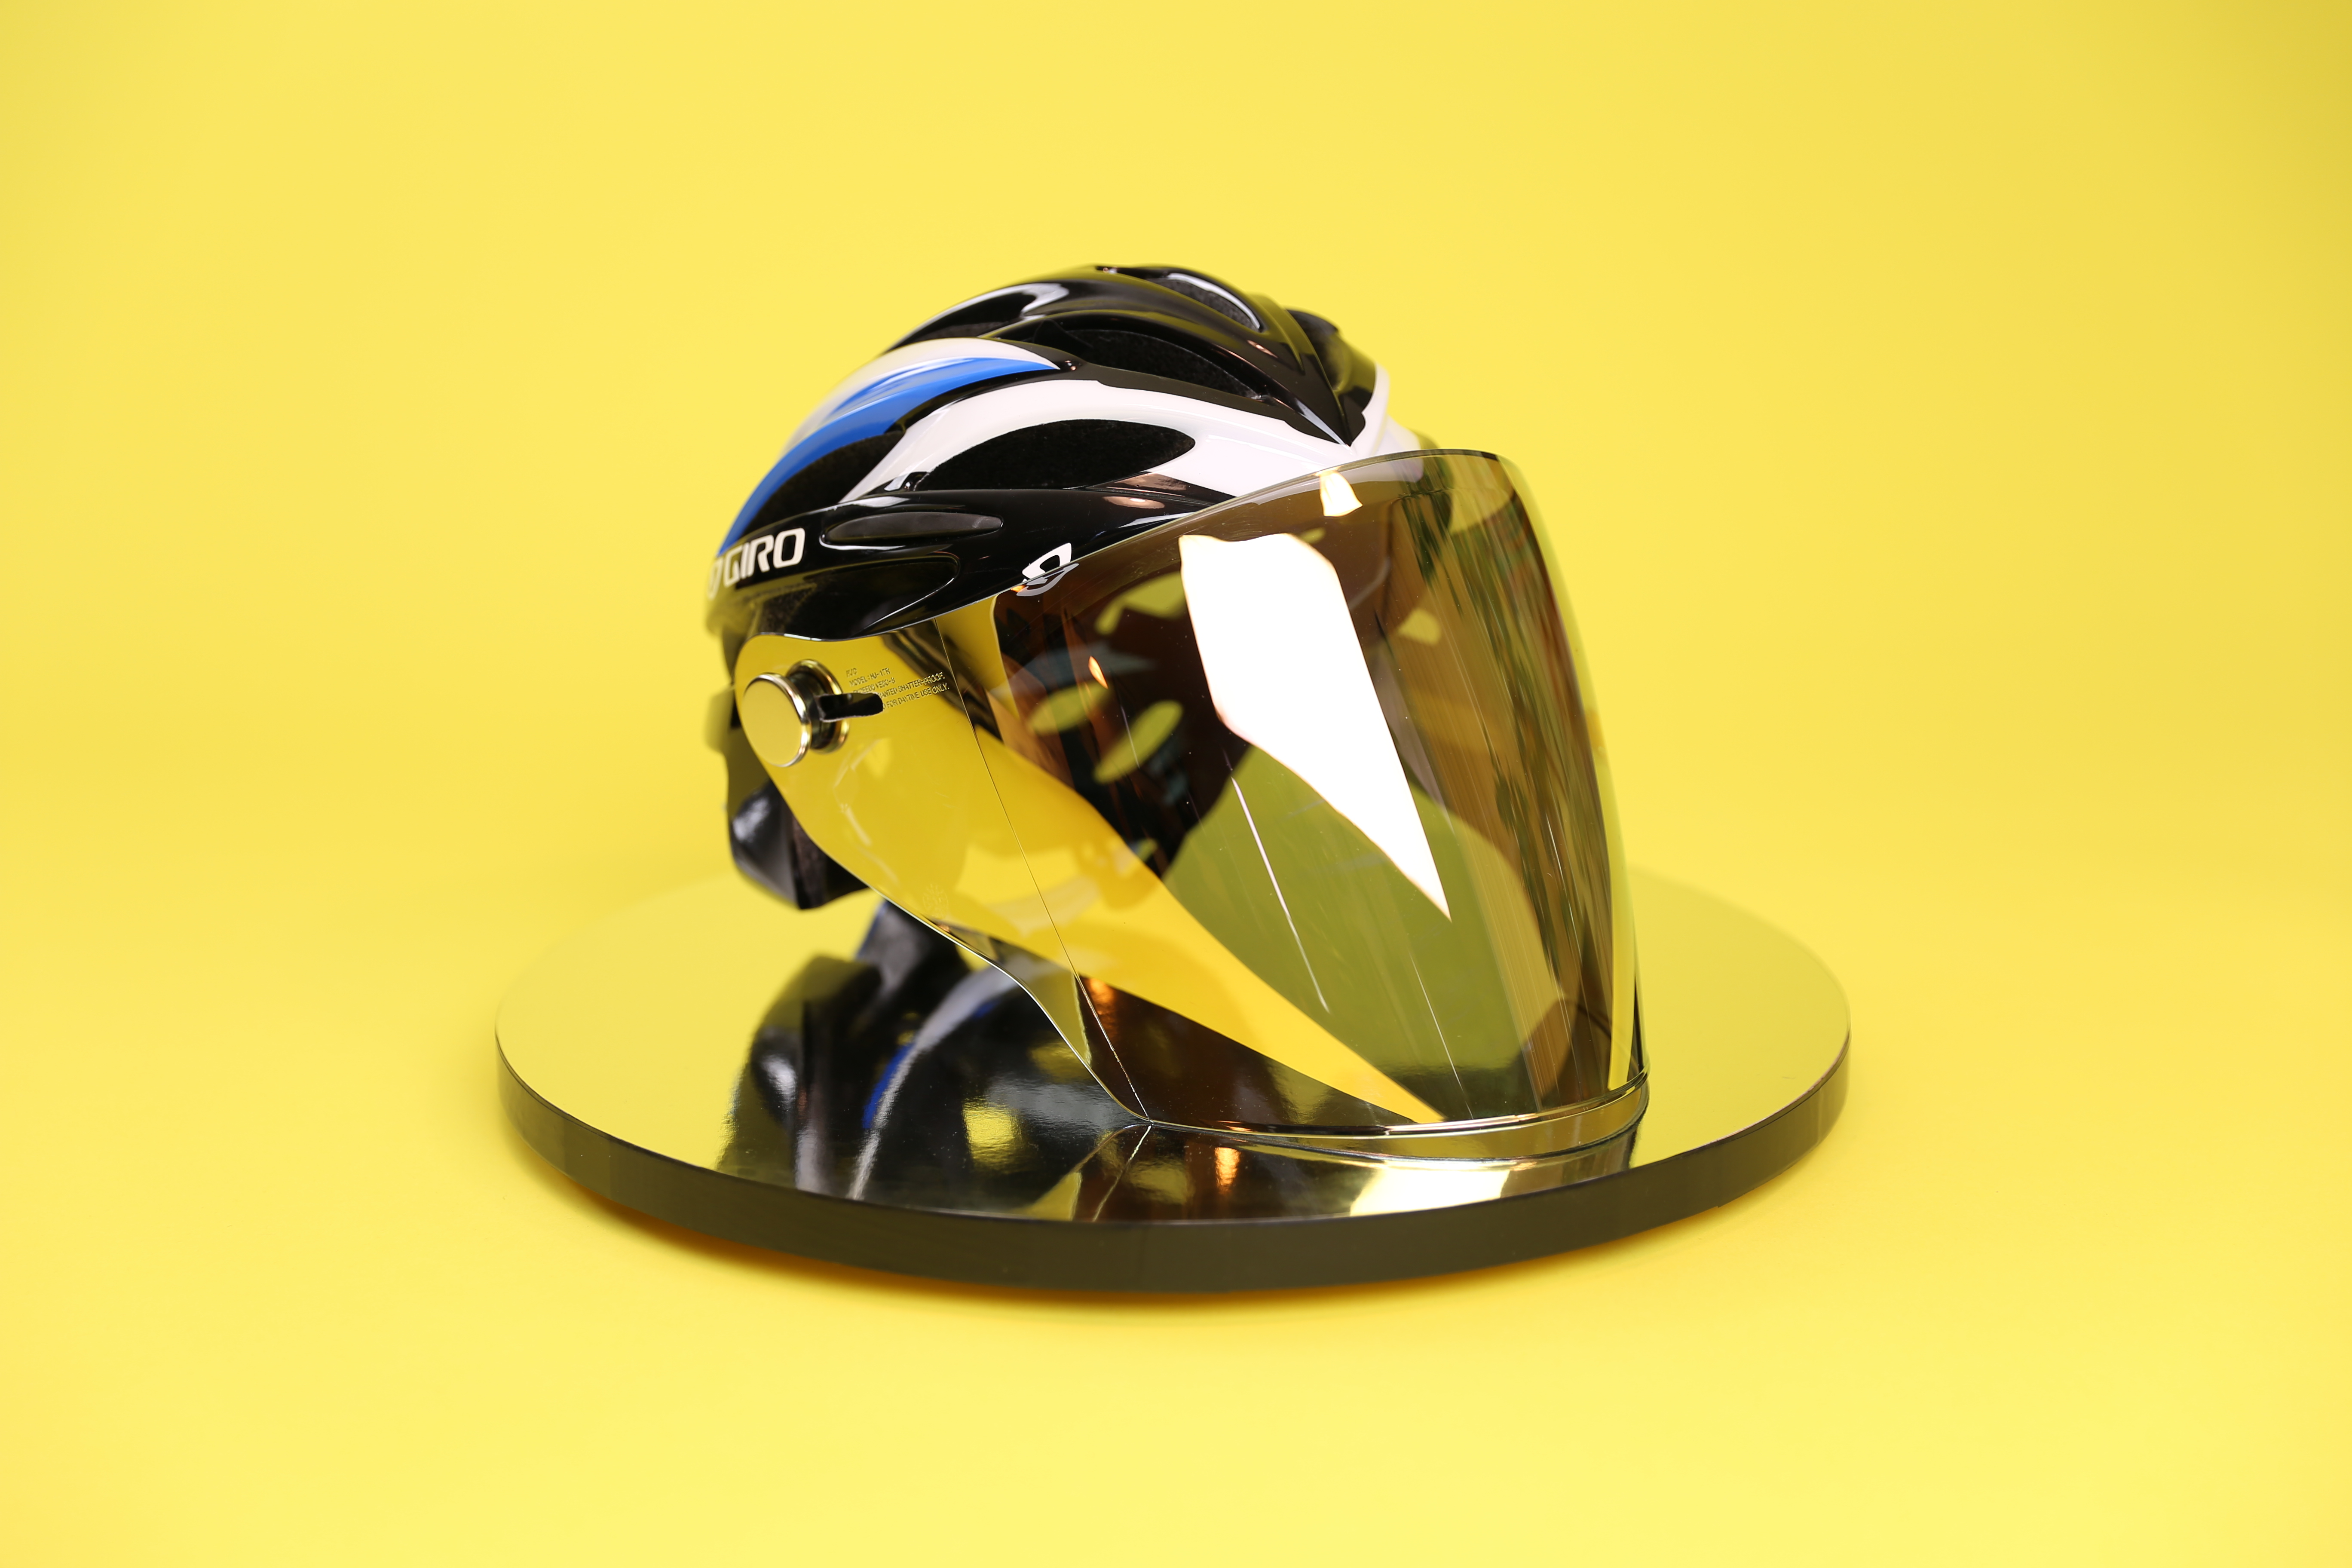 bike helmet with shield